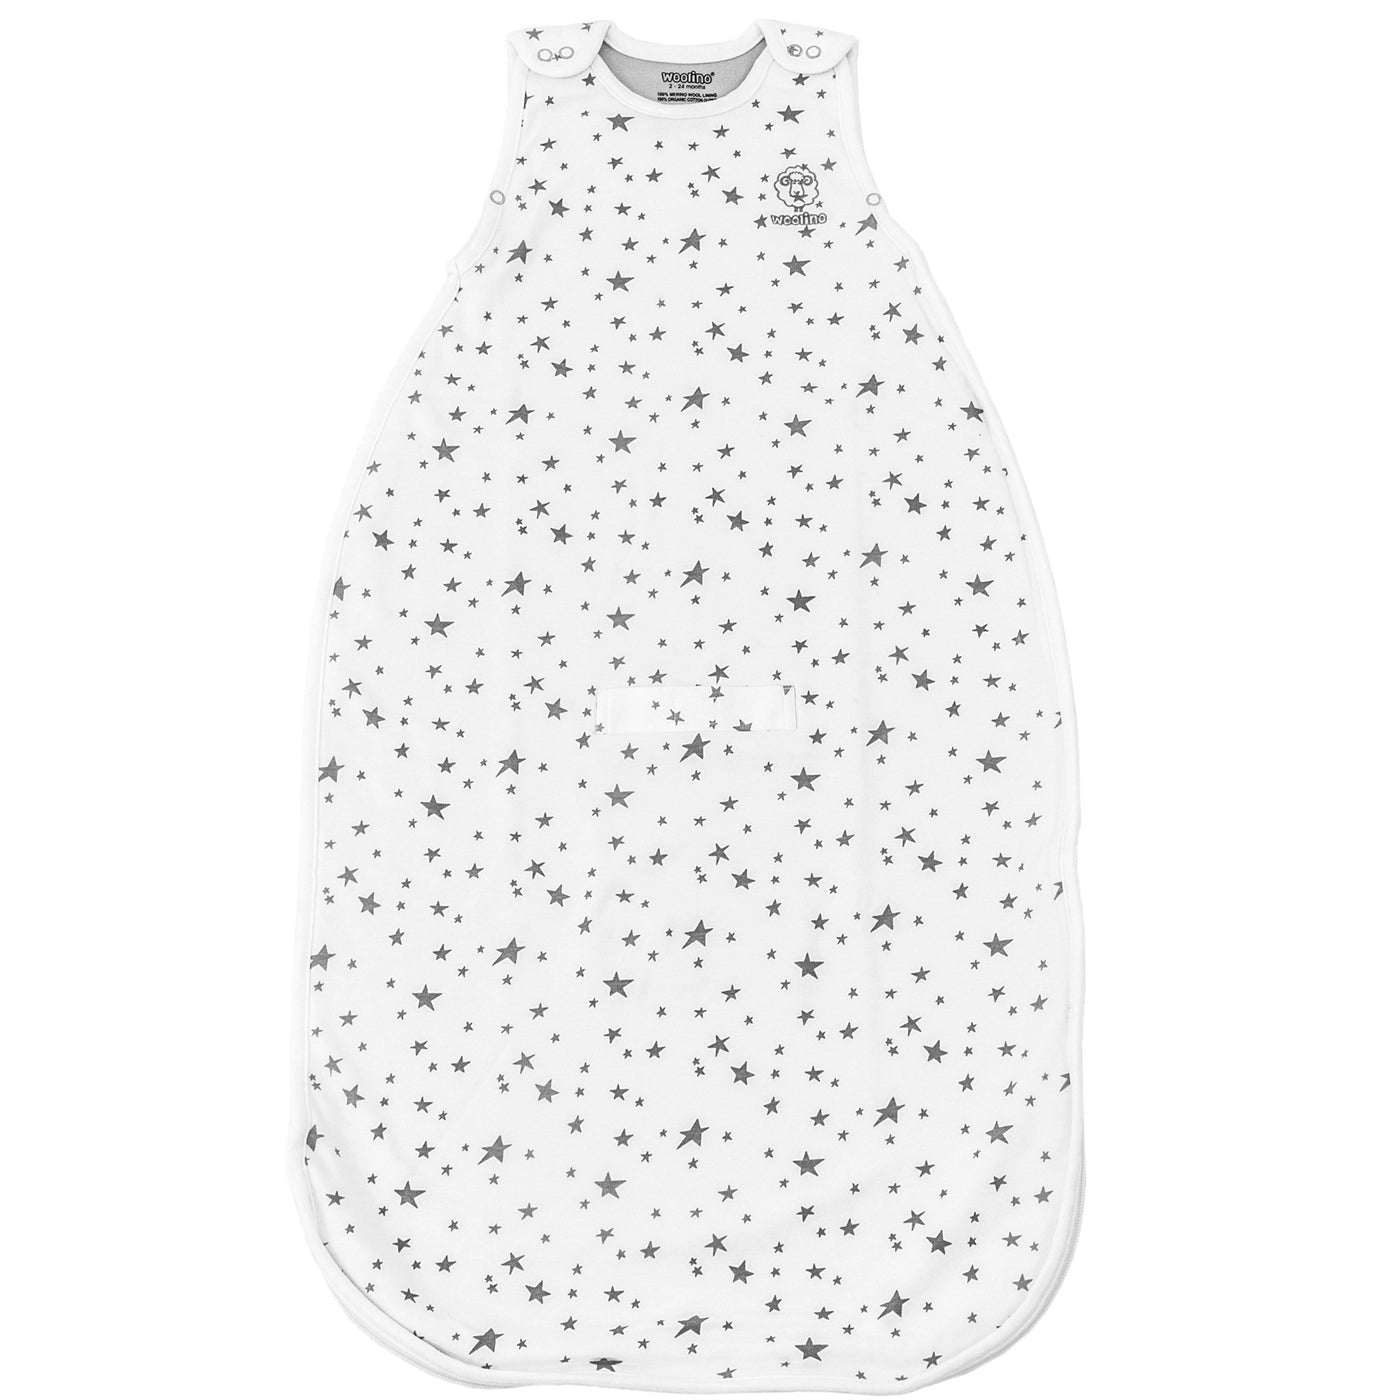 Imperfect 4 Season™ Ultimate Toddler Sleep Bag, Merino Wool & Organic Cotton, 2 - 4 Years, Star White